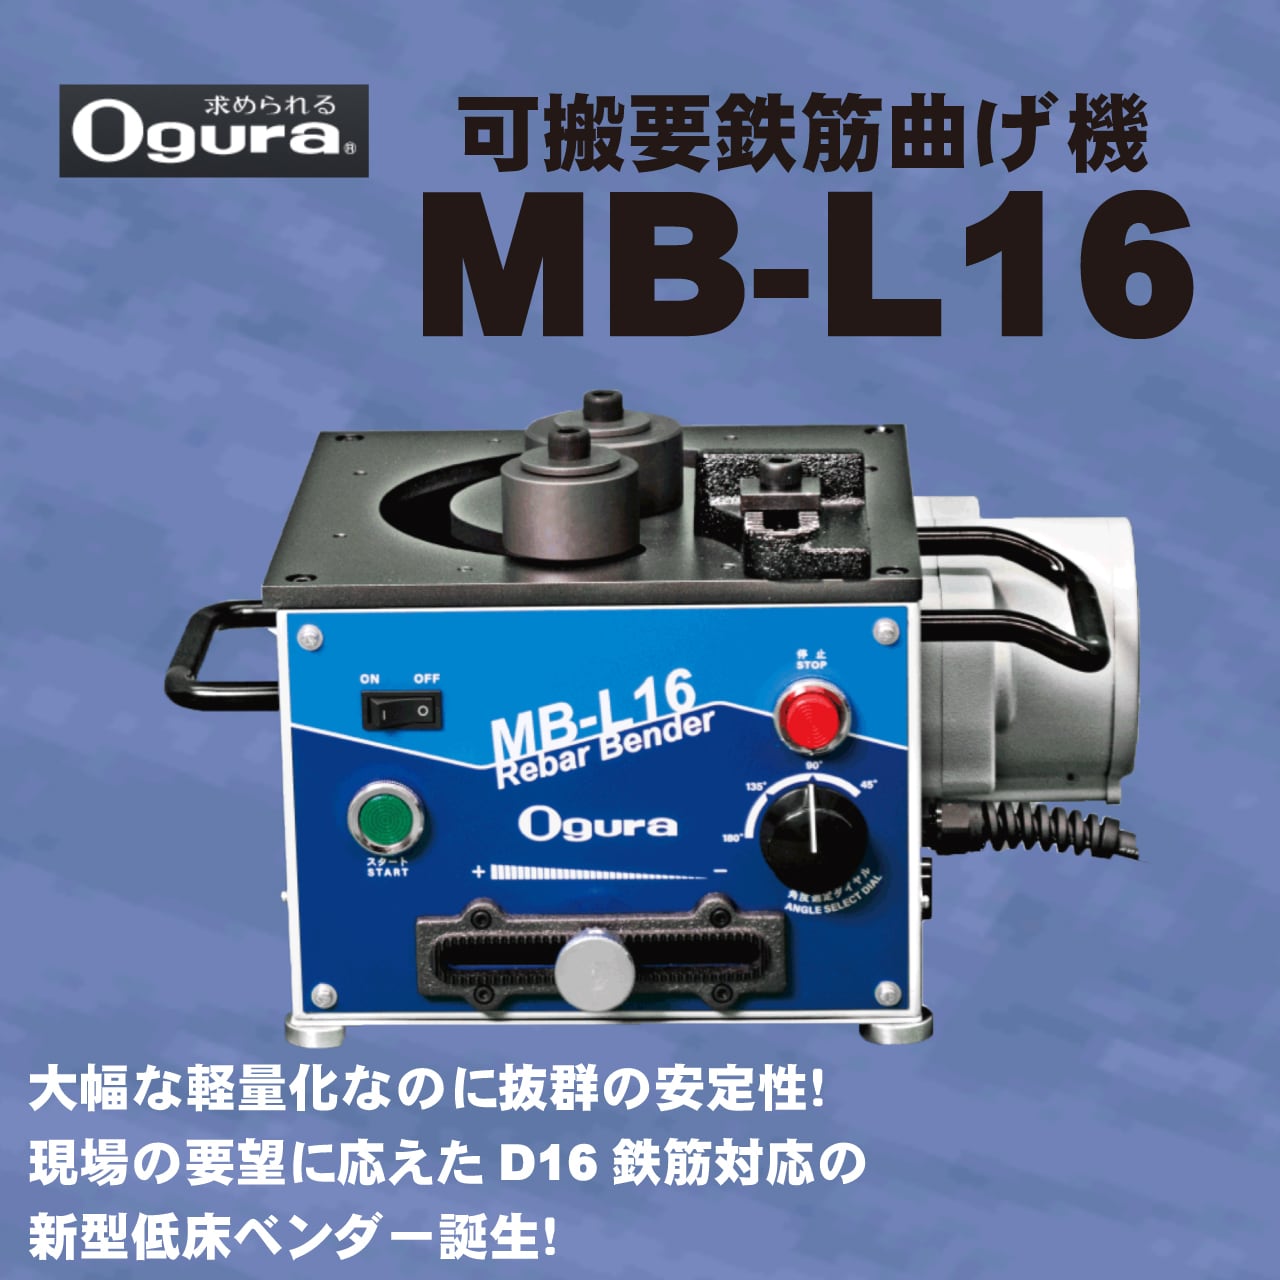 新生活 可搬用鉄筋曲げ機 MB-L16 低床鉄筋ベンダー D16鉄筋 SD390 対応 鉄筋切断機